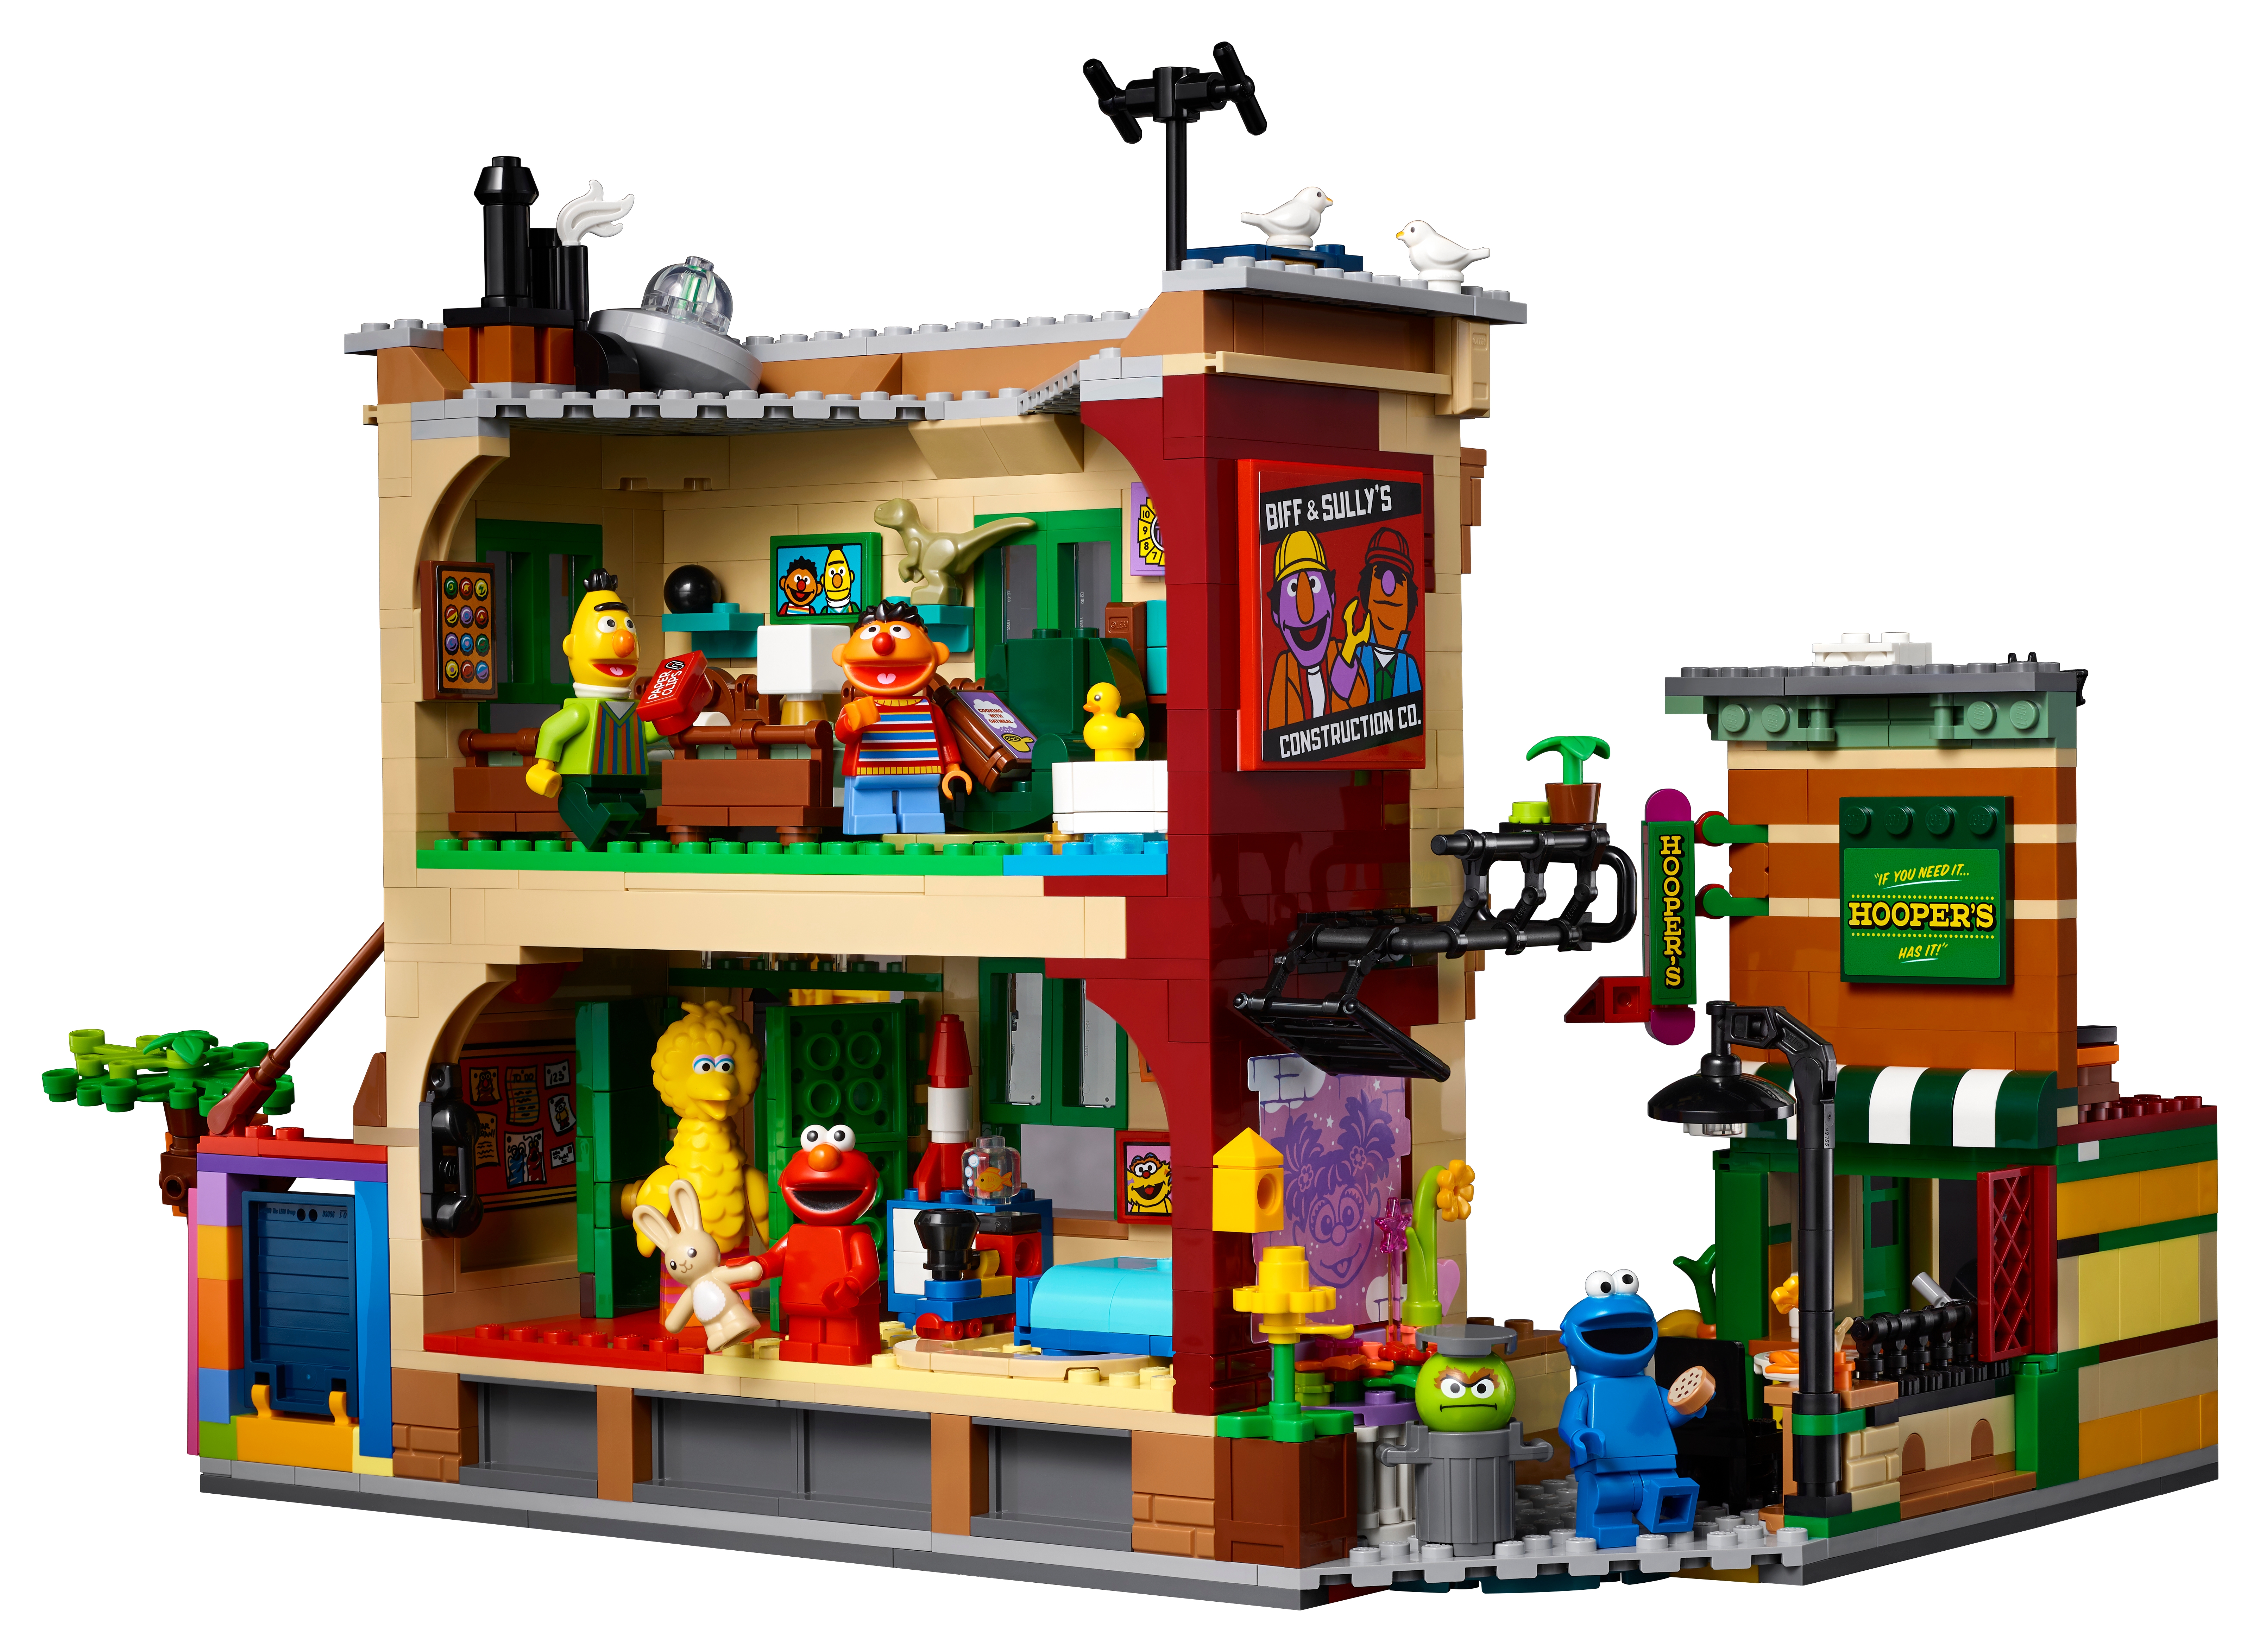 LEGO Ideas 123 Sesame Street 21324 New